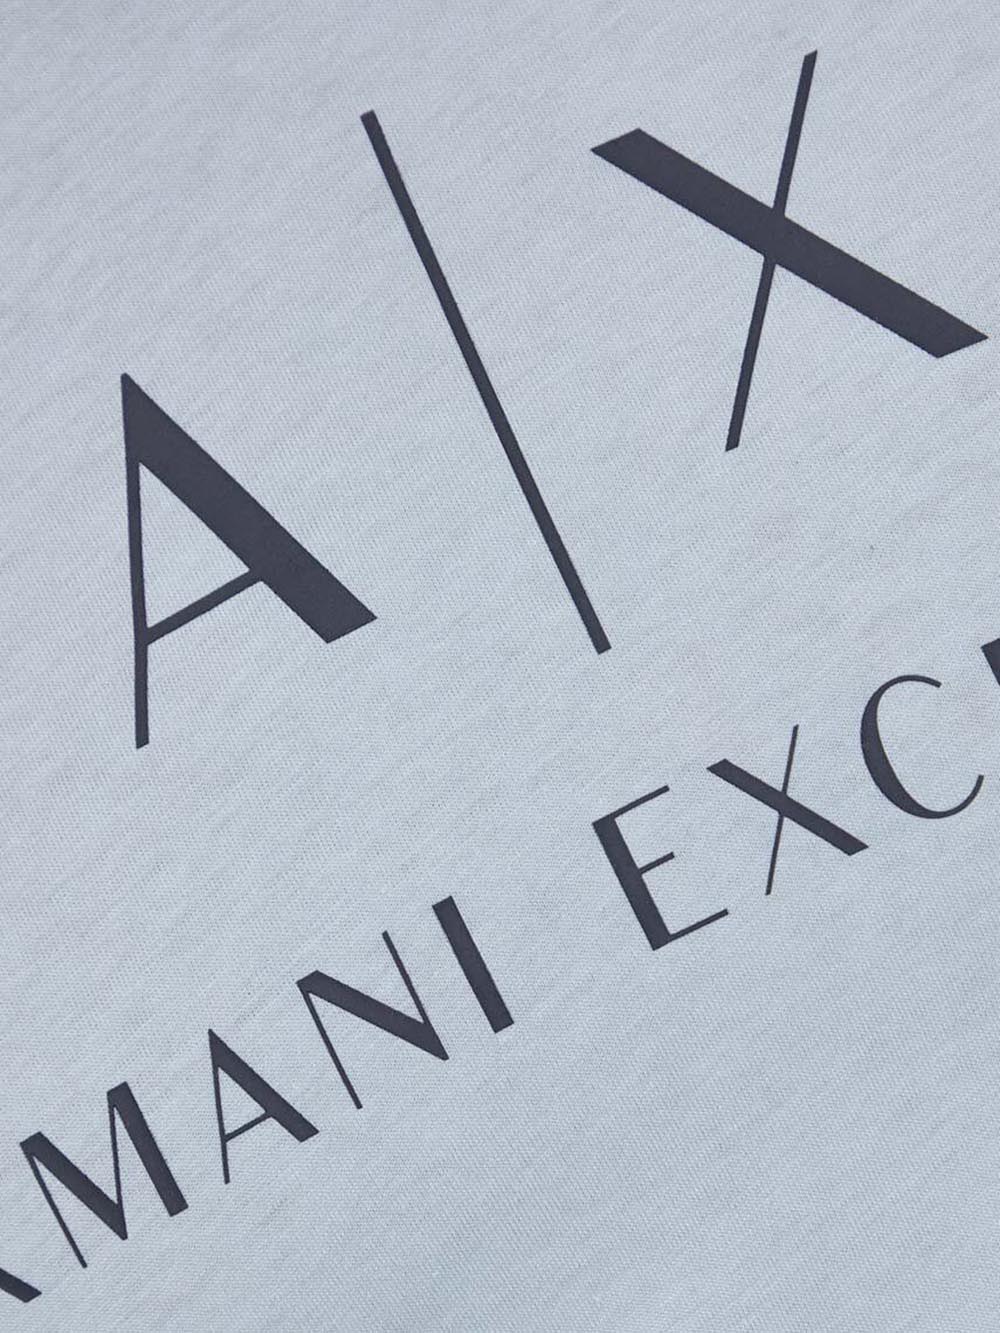 Armani Exchange T-shirt Uomo Celeste